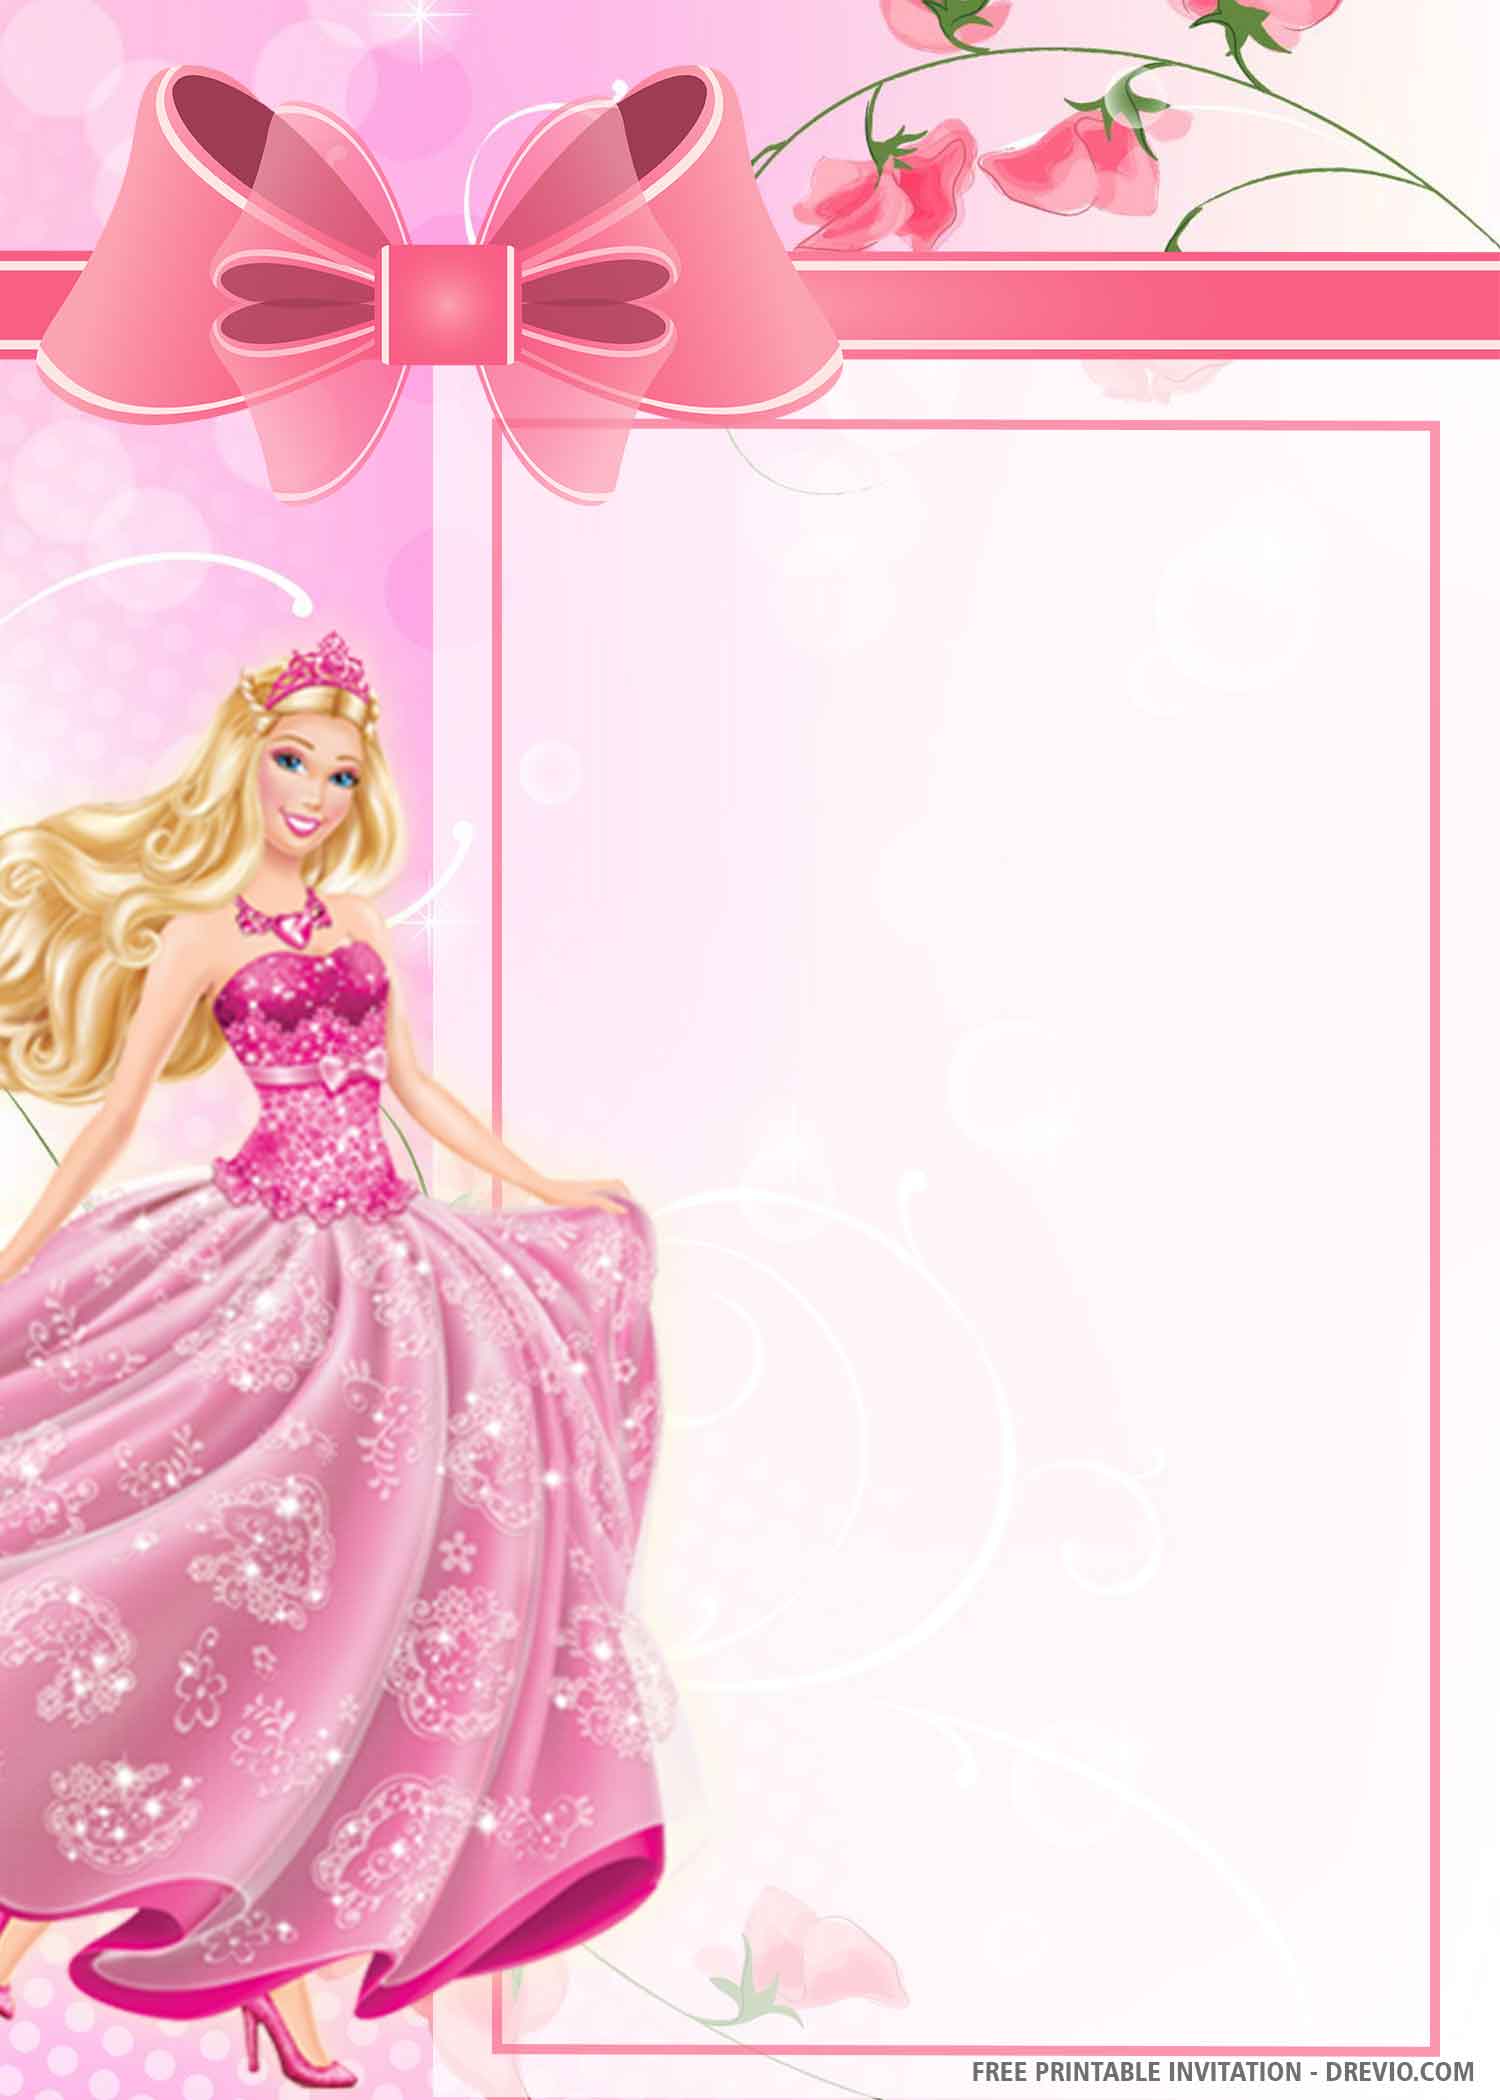 (FREE PRINTABLE) - Barbie Dream House Birthday Invitation ...